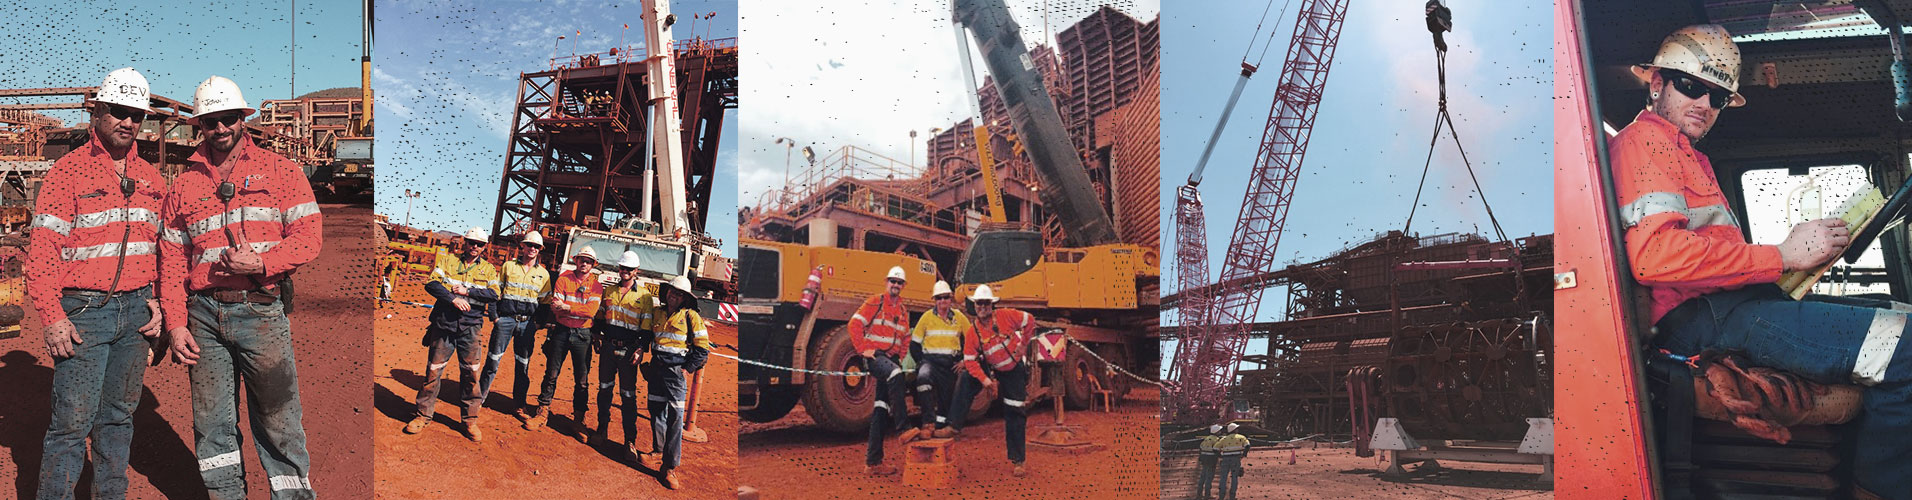 Crane & Riggers Operators South32 Cannington Mining Shutdown FIFO QLD